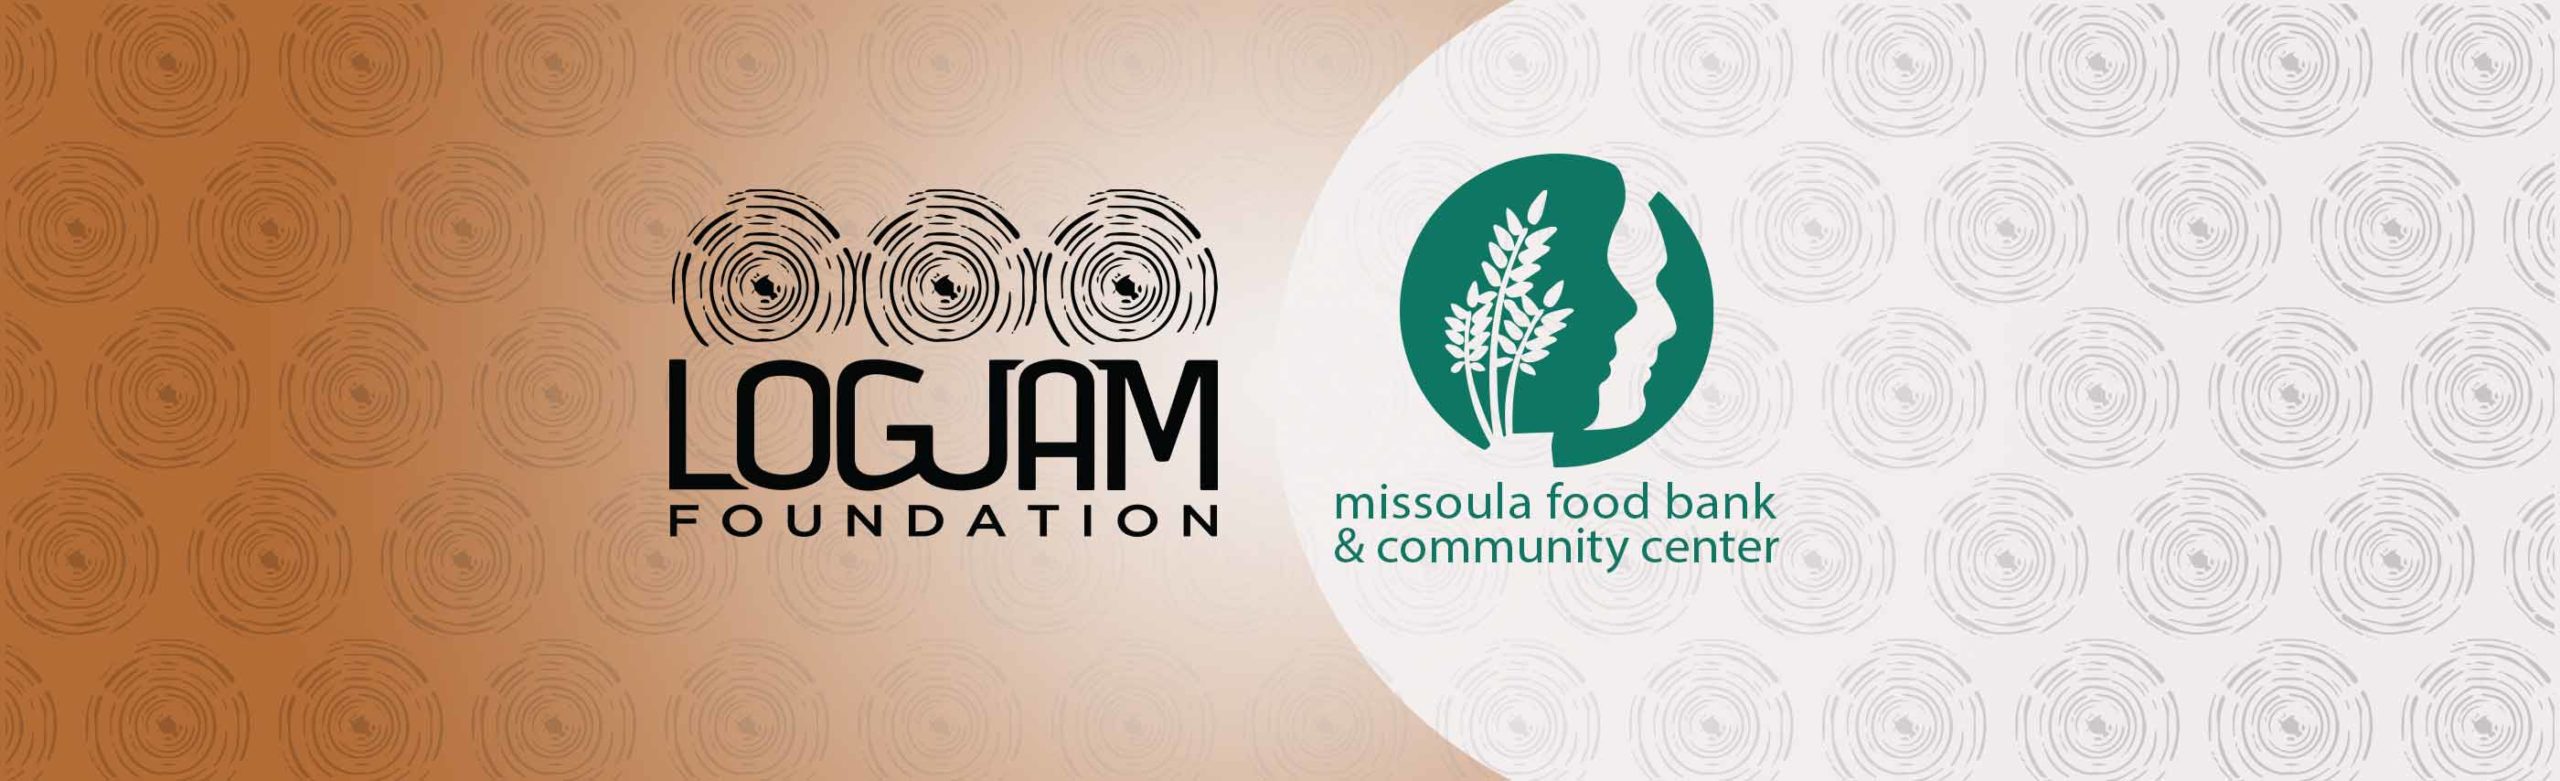 Logjam Supports the Missoula Food Bank & Community Center’s EmPower Pack Program Image